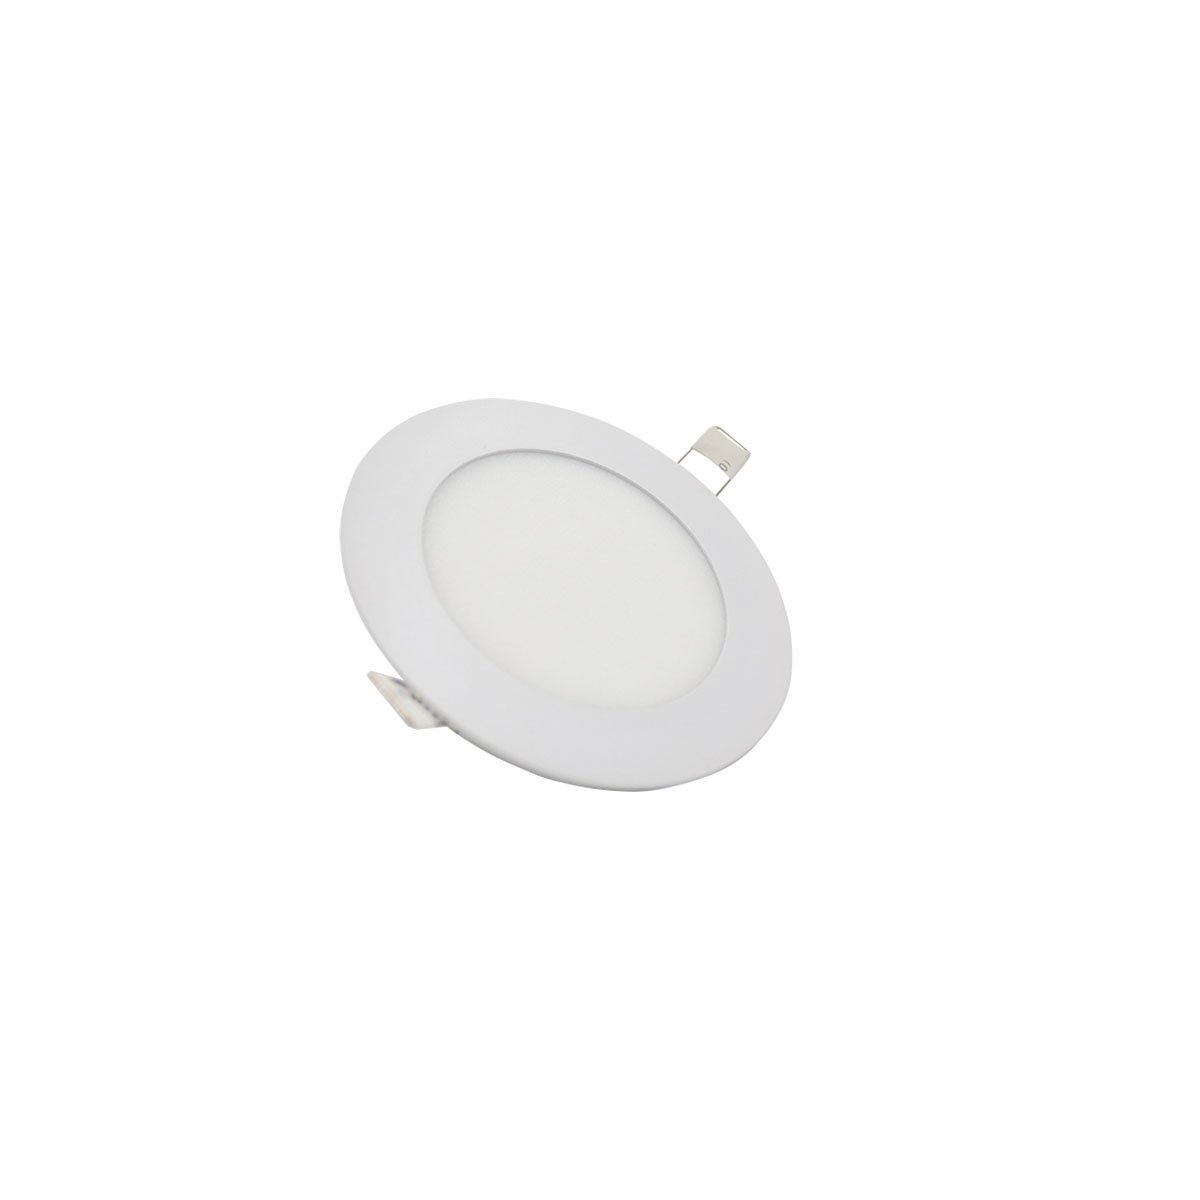 Painel Plafon Luminária Teto Embutir Redondo Led 6w Gesso:branco Frio 6000k - 1